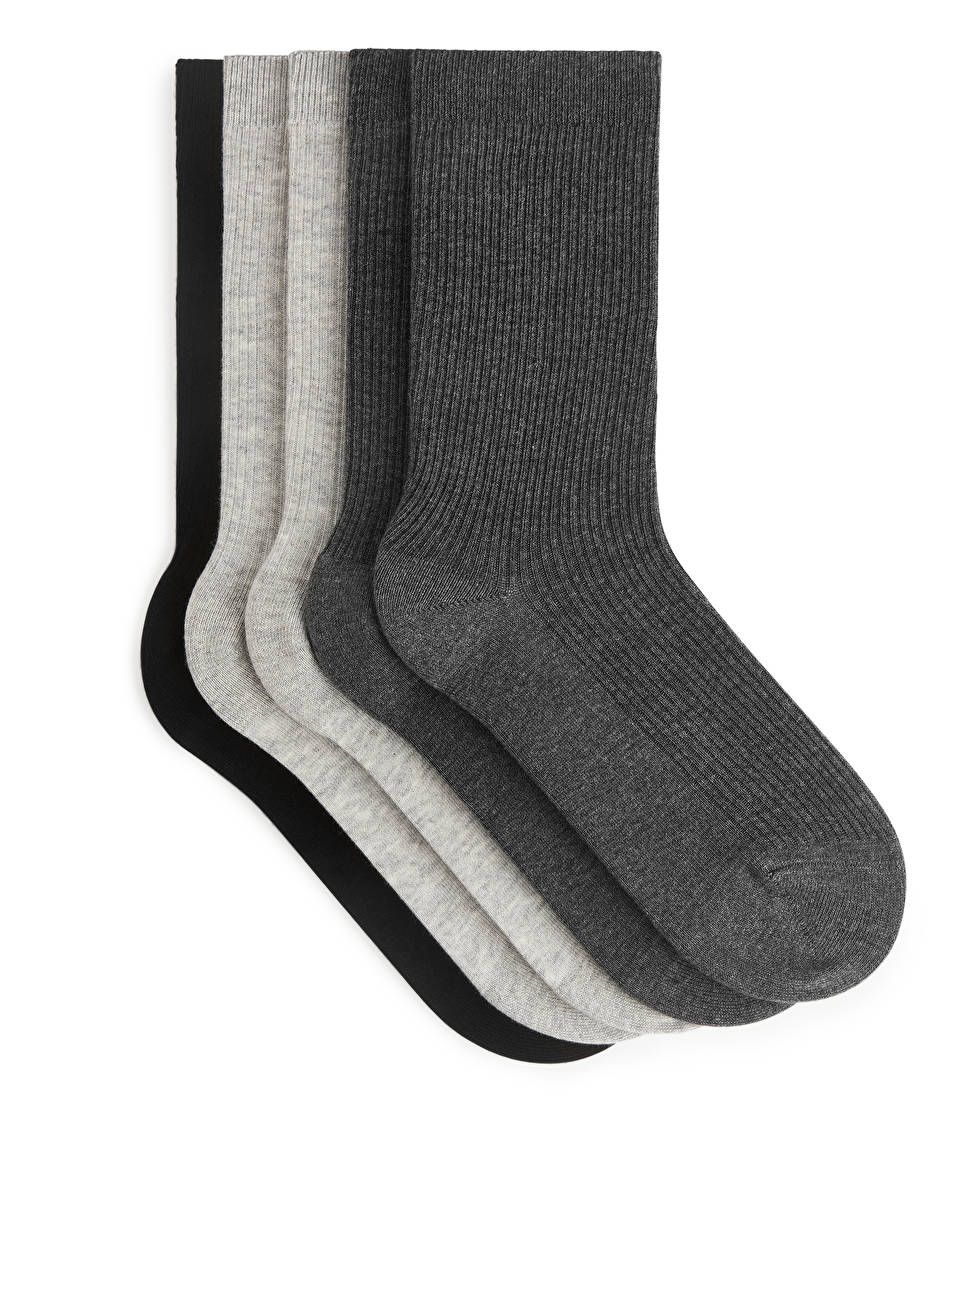 Cotton Rib Socks Set of 5 | ARKET (US&UK)